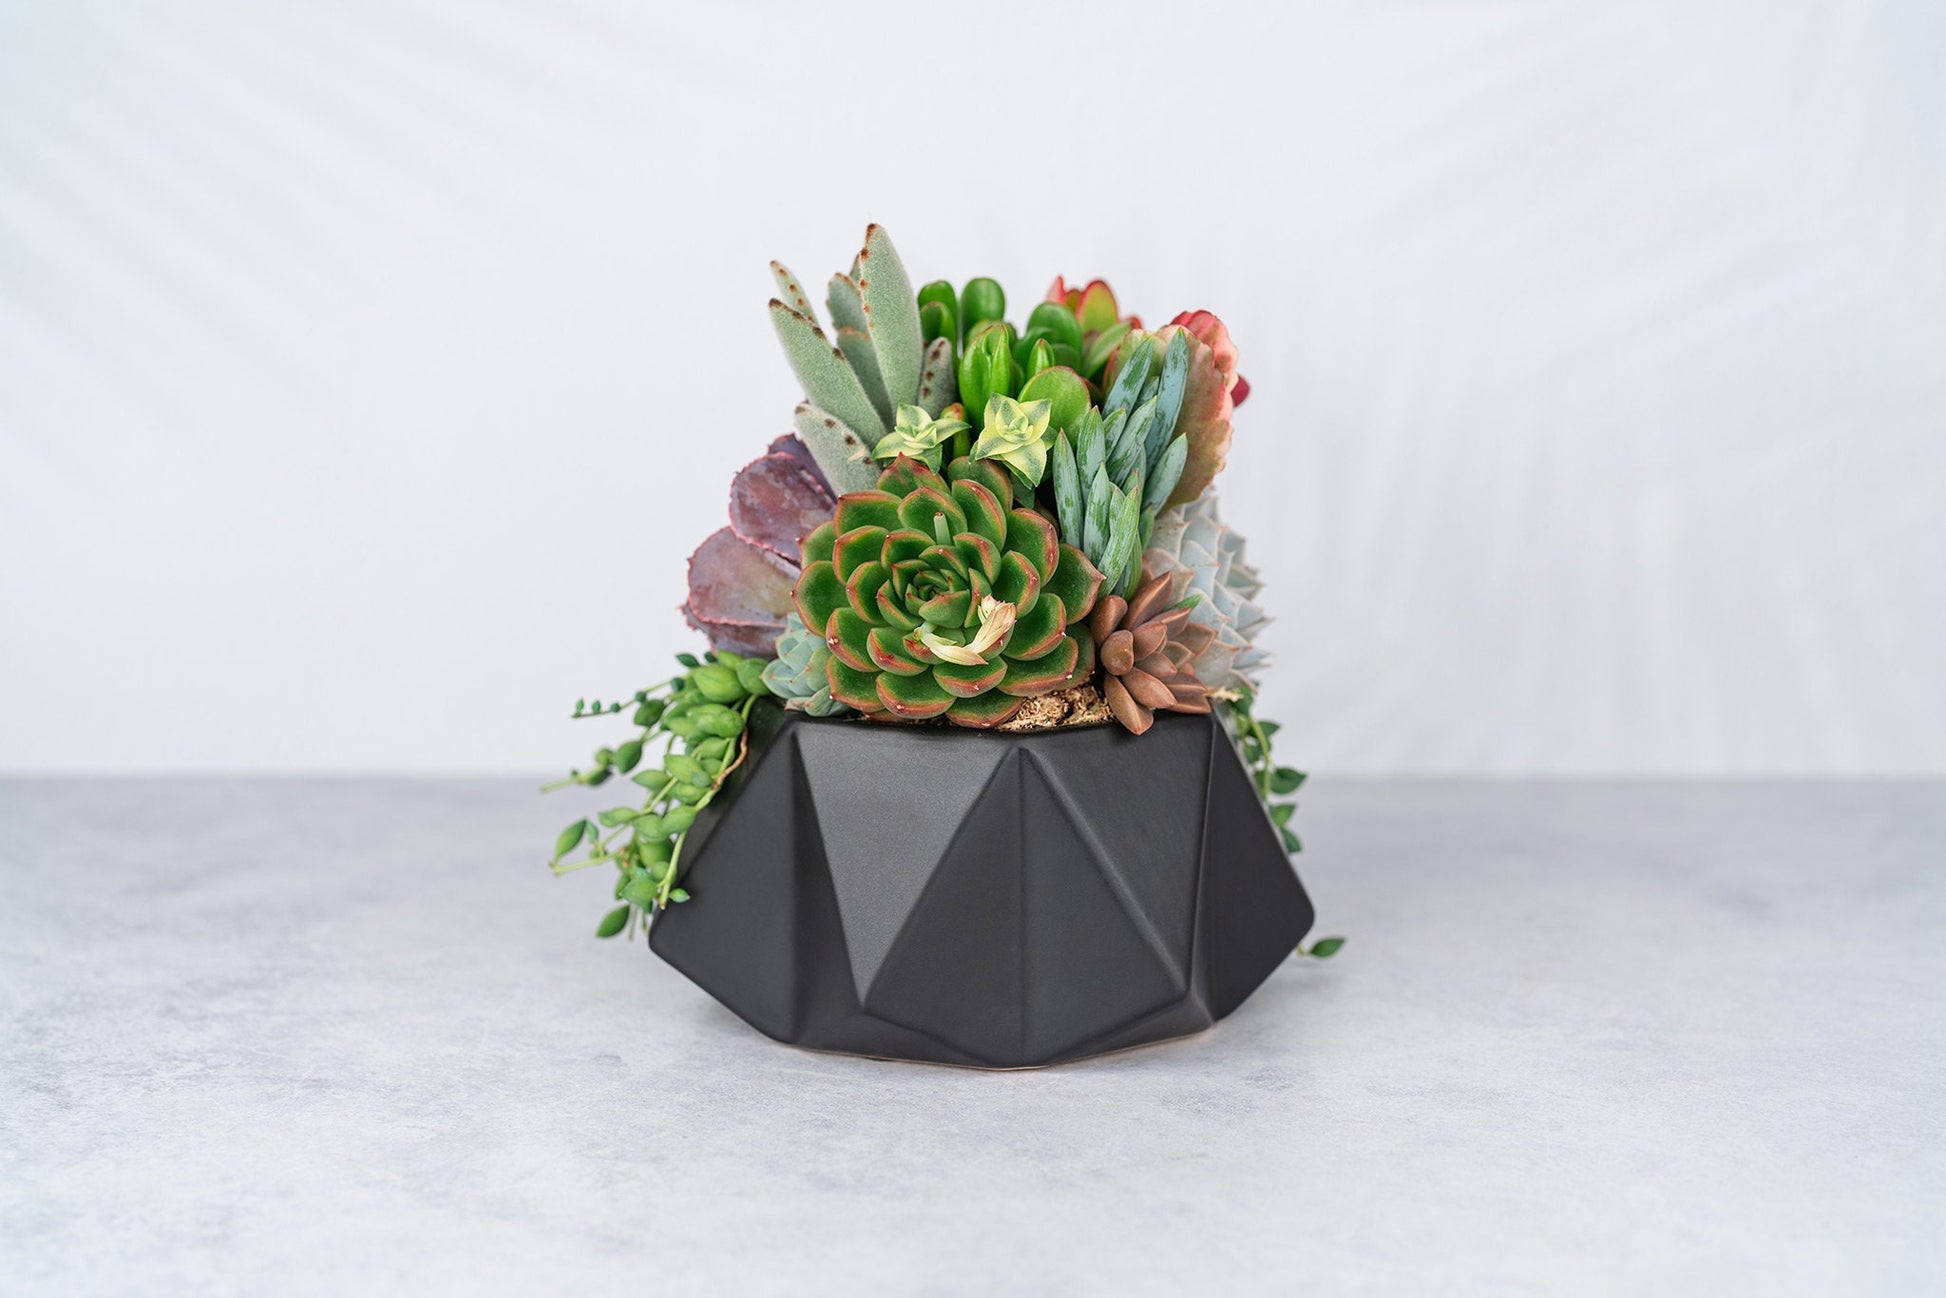 Geometric Black Bowl Succulent Arrangement Planter: Living Succulent Gift or Centerpiece for Weddings and Events